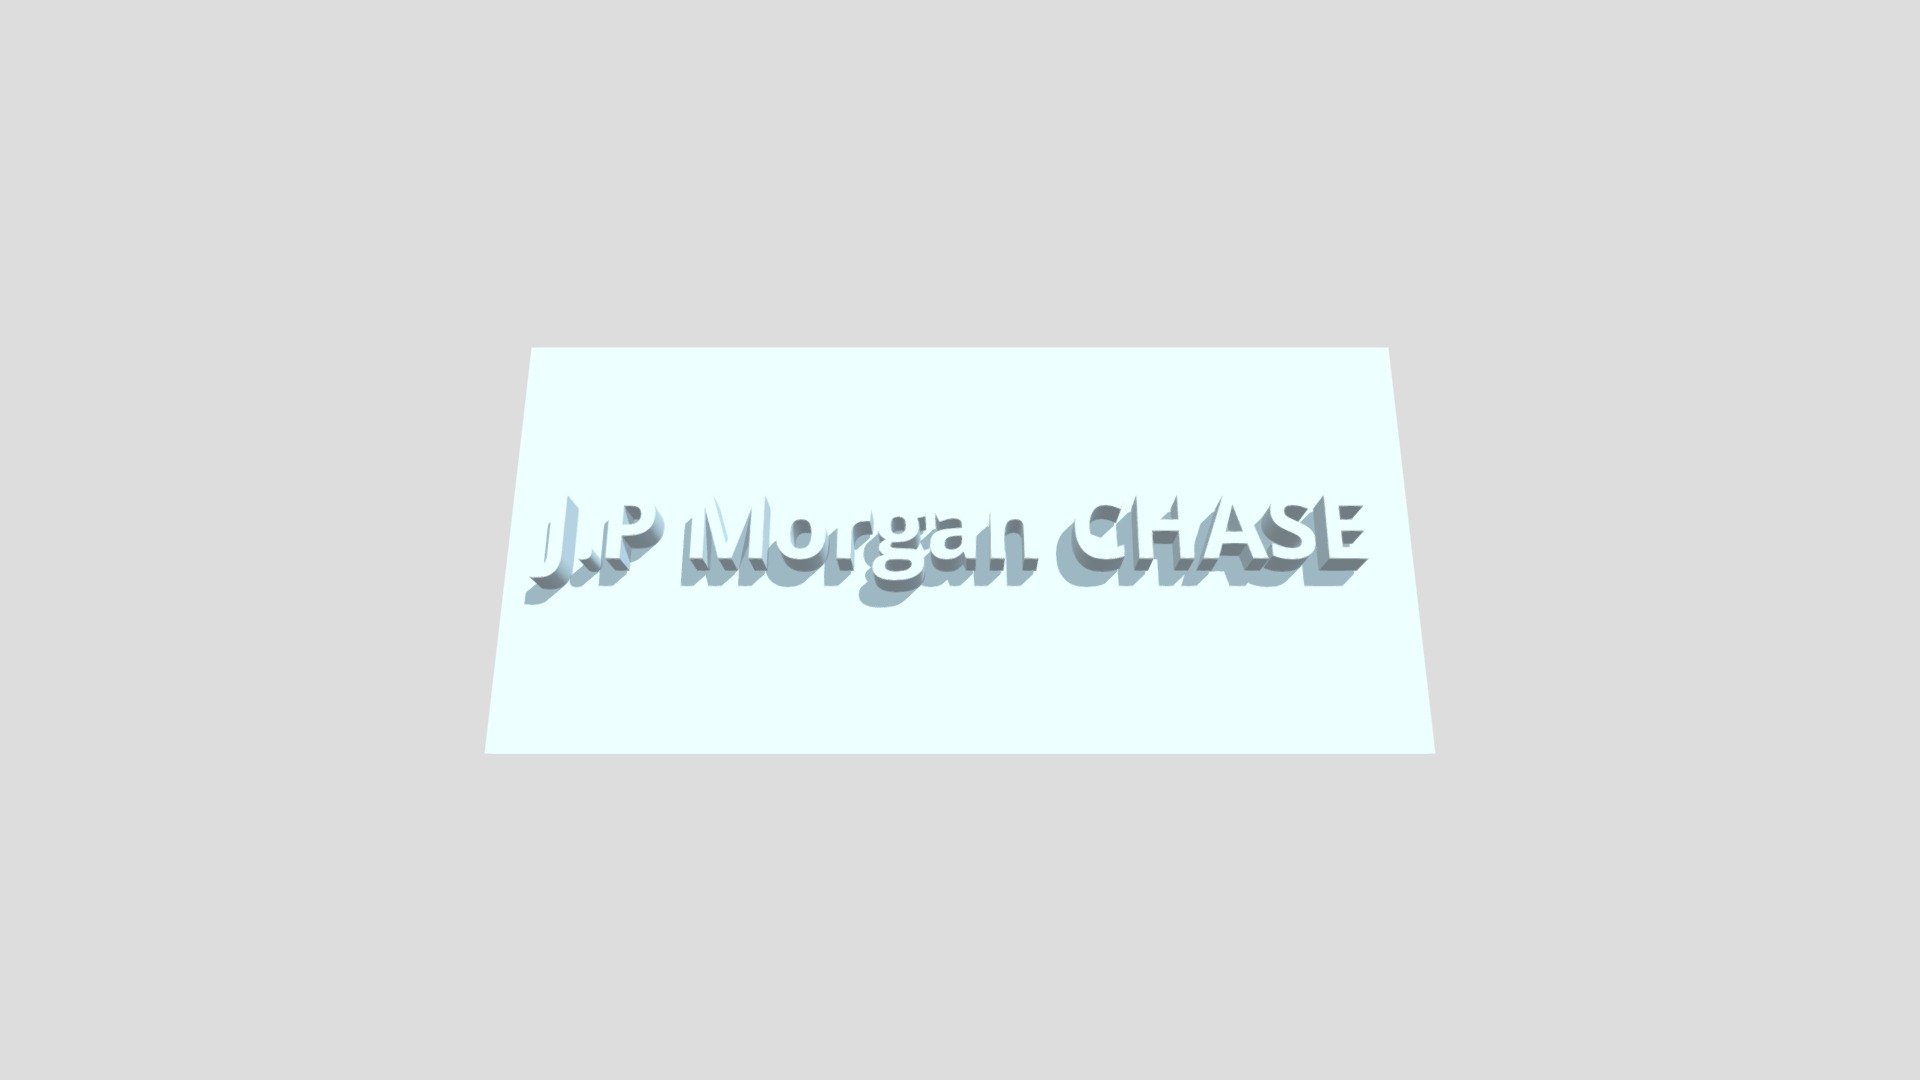 NYC Chase Bank Sign by Patrick Kuprewicz